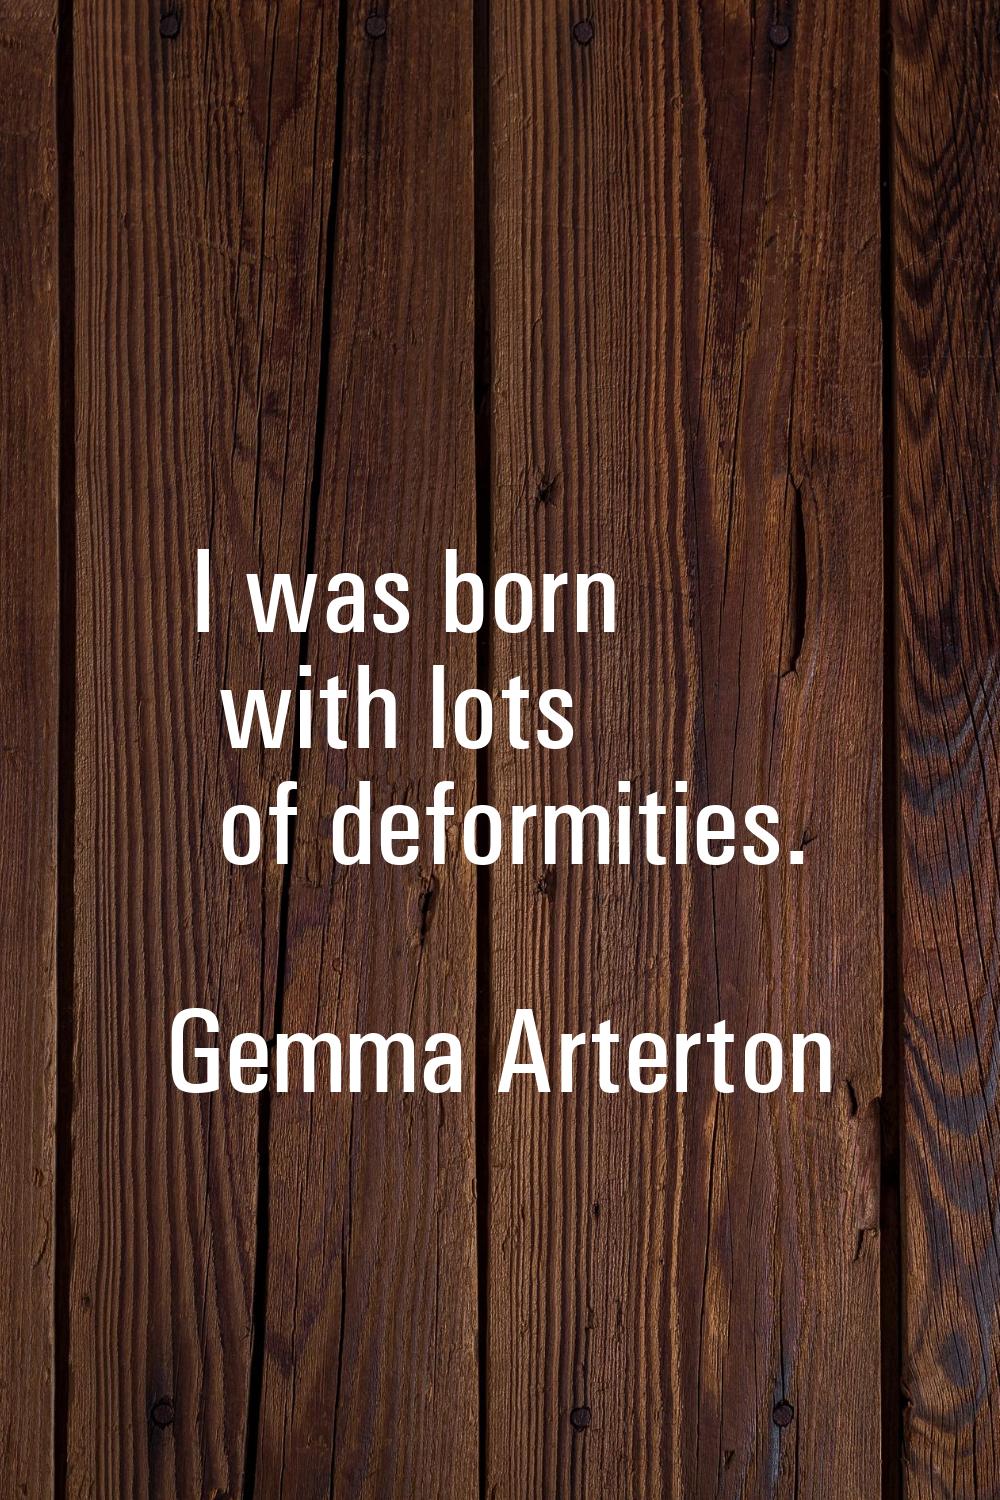 I was born with lots of deformities.